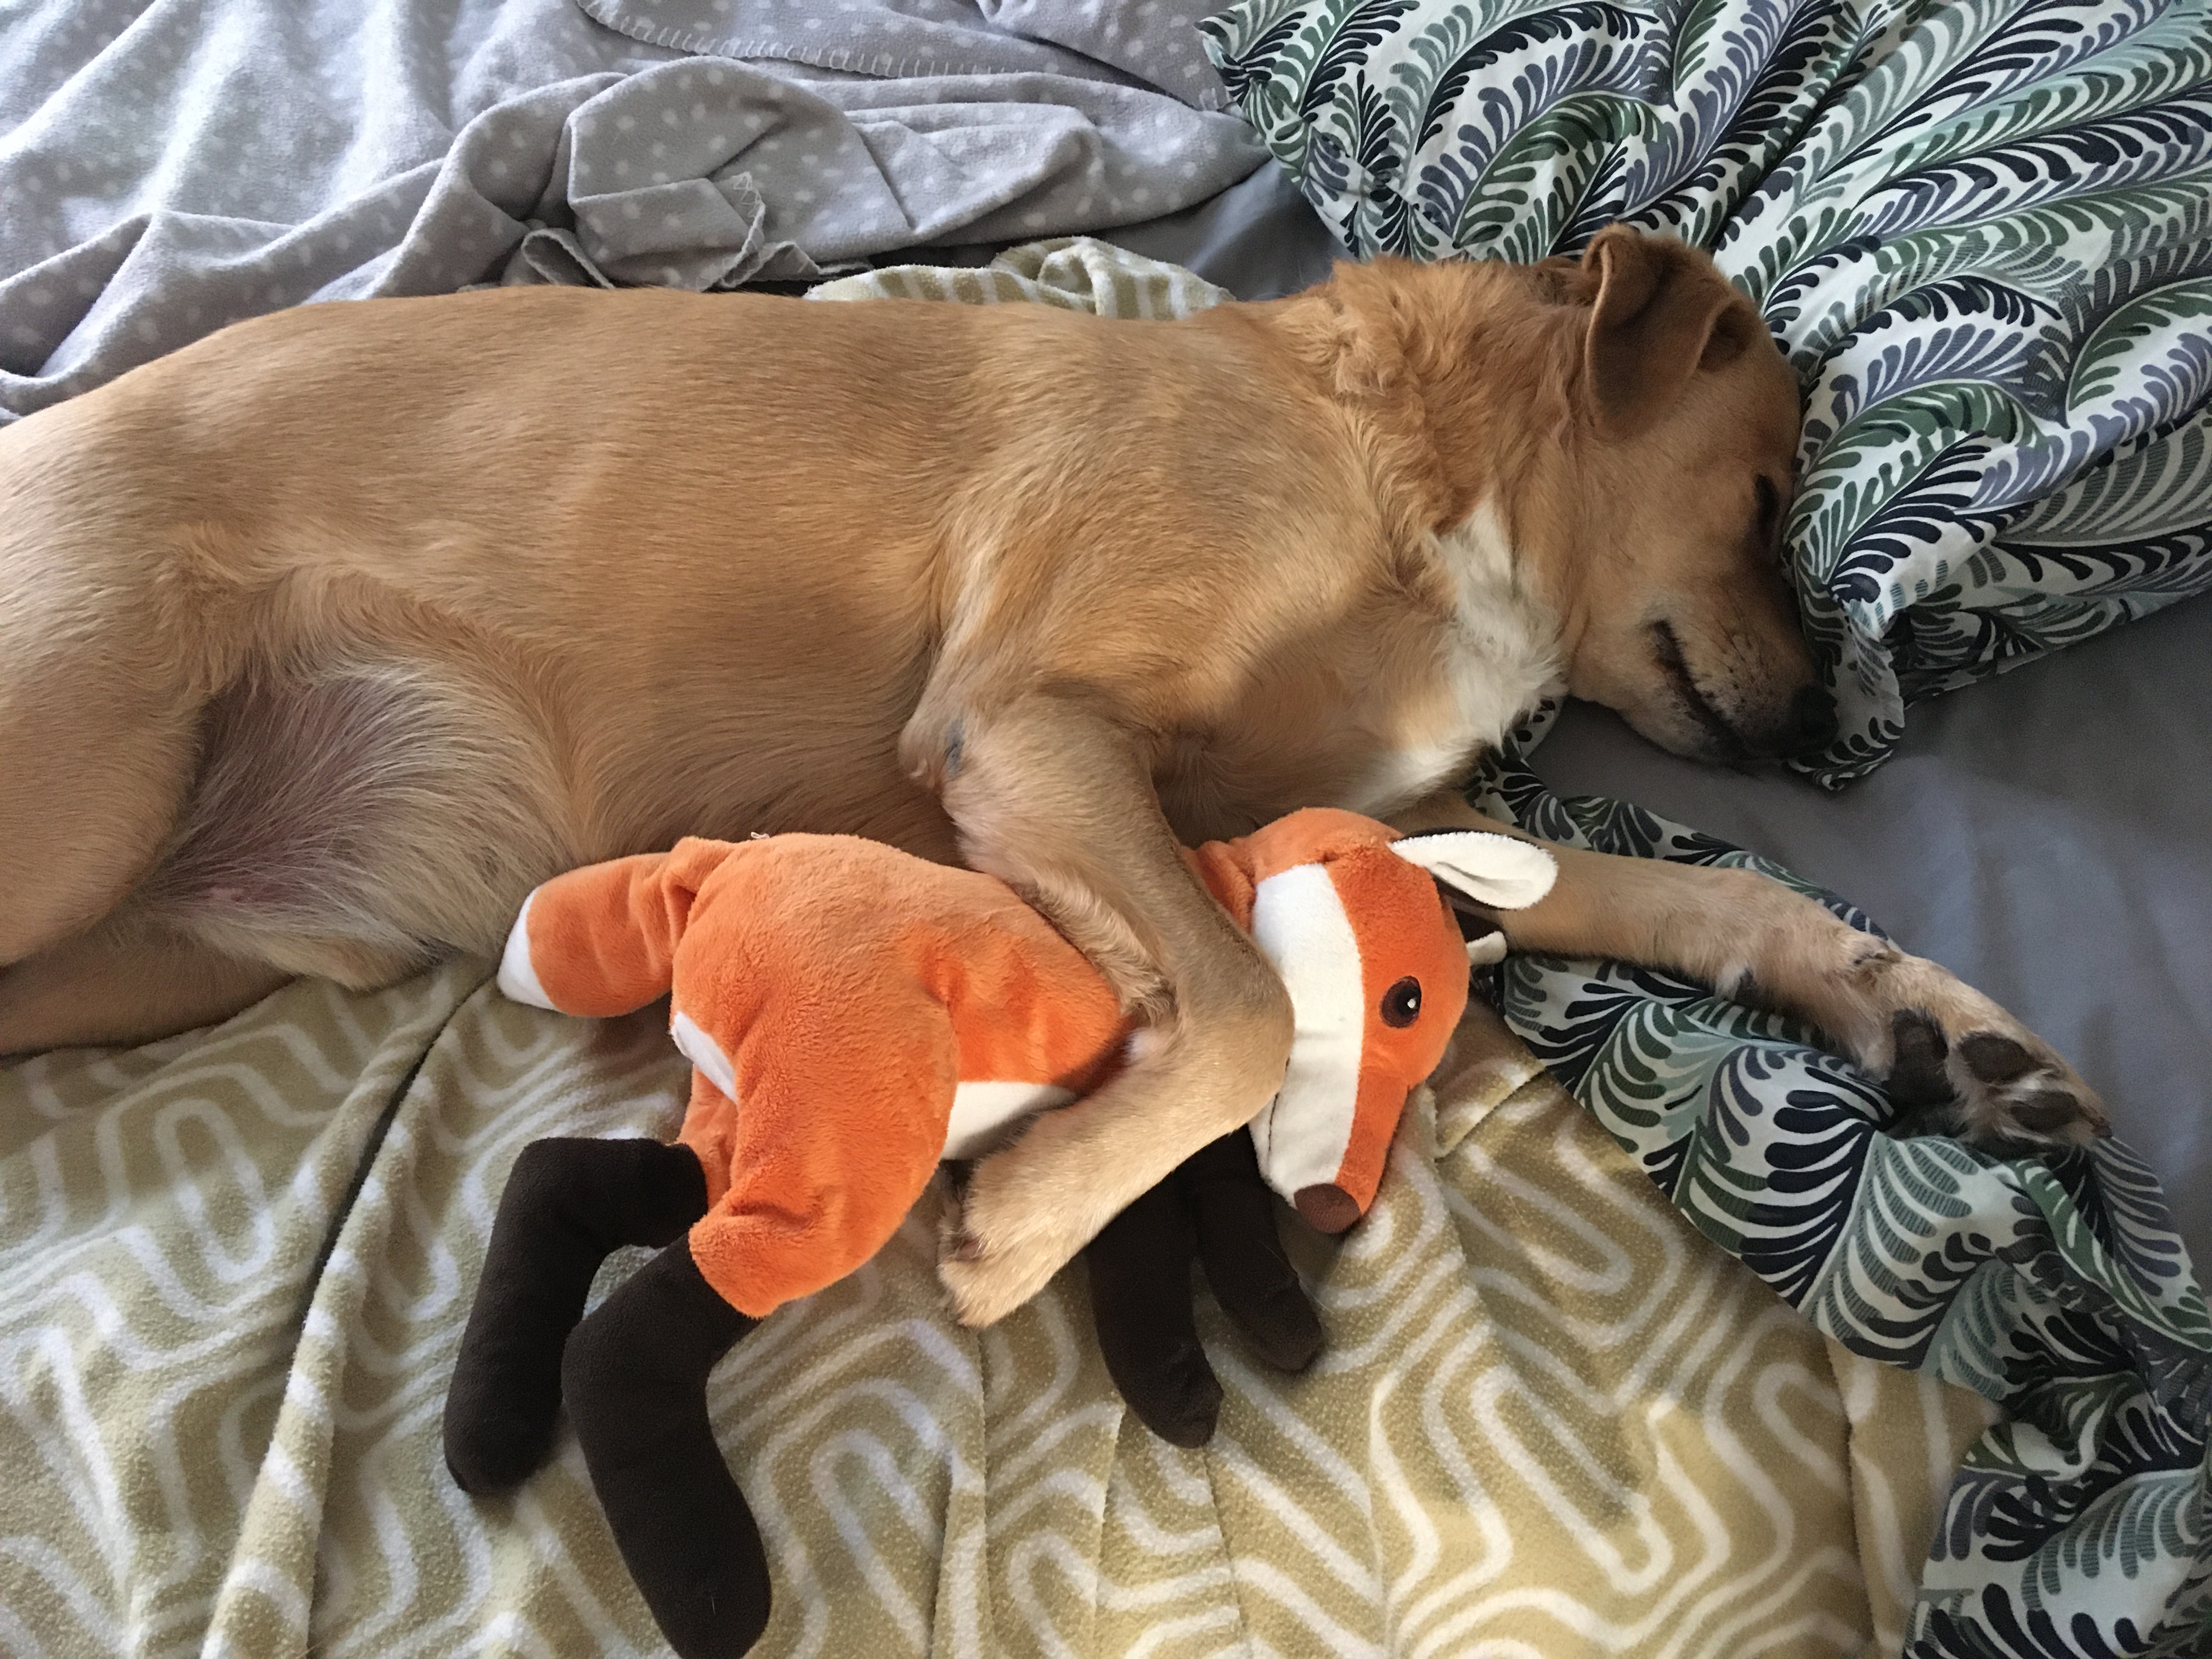 A dog sleeps on a bed, hugging a stuffed toy fox